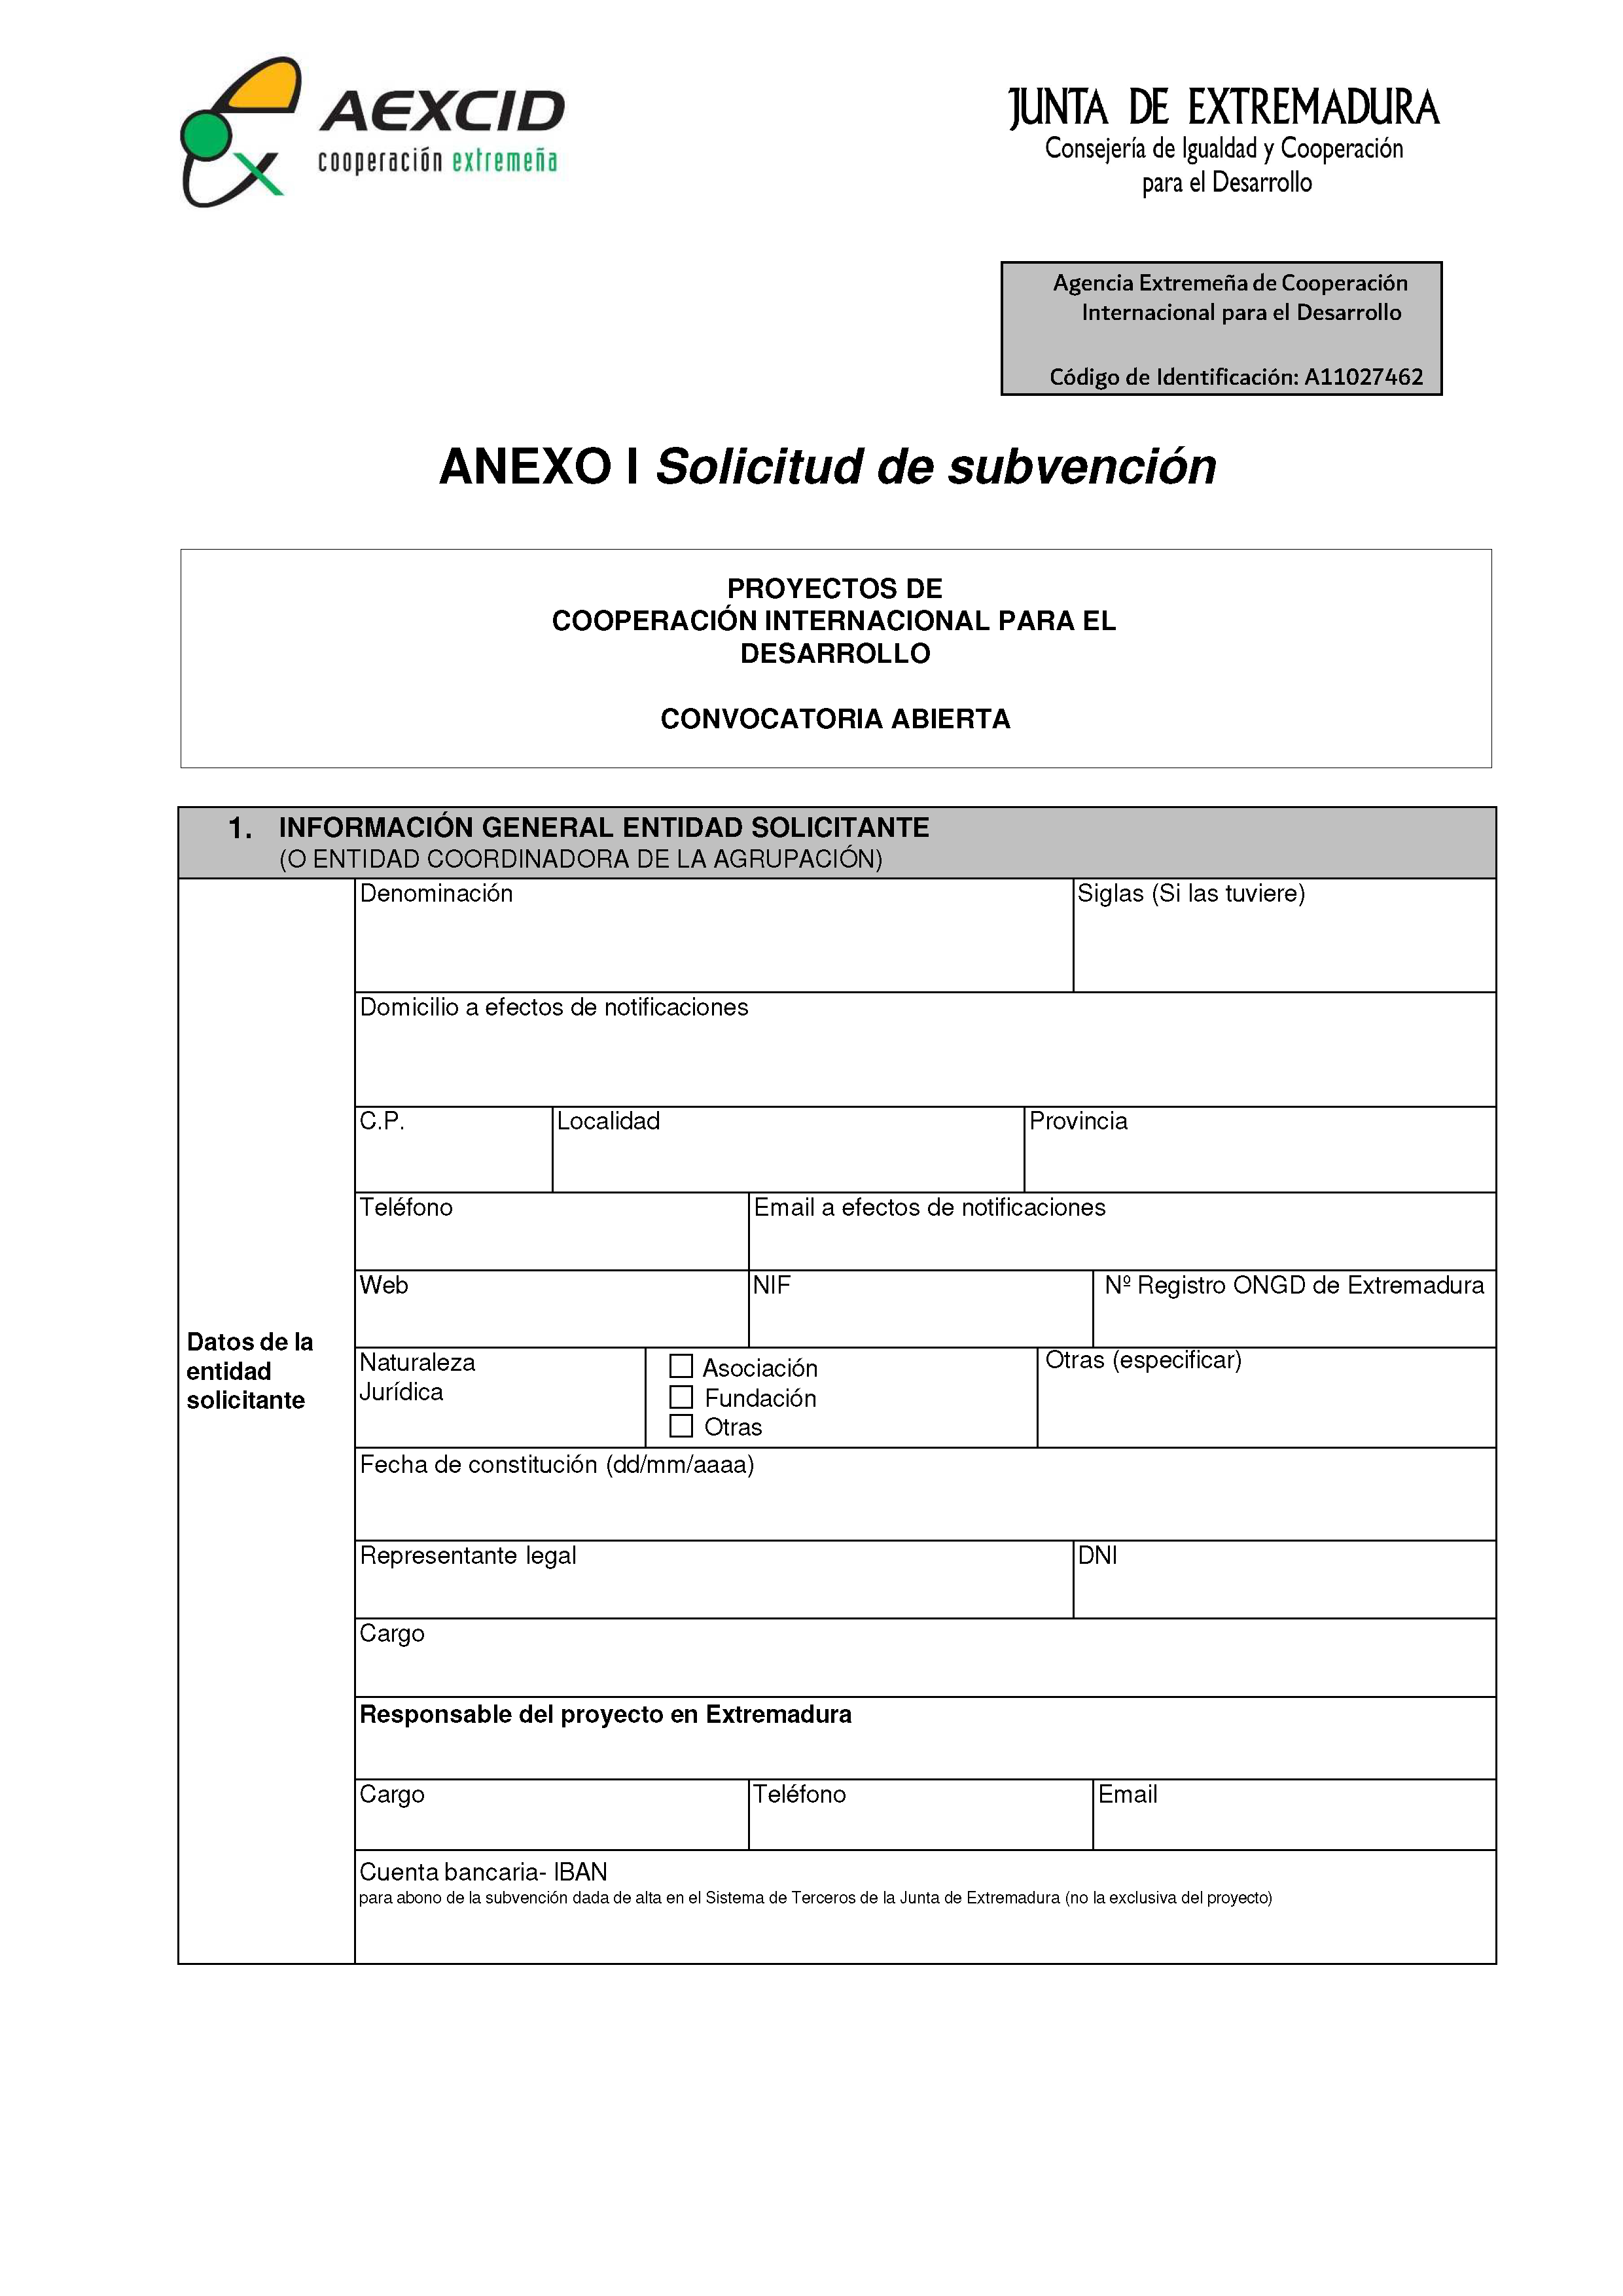 ANEXO I SOLICITUD DE SUBVENCION Pag 1